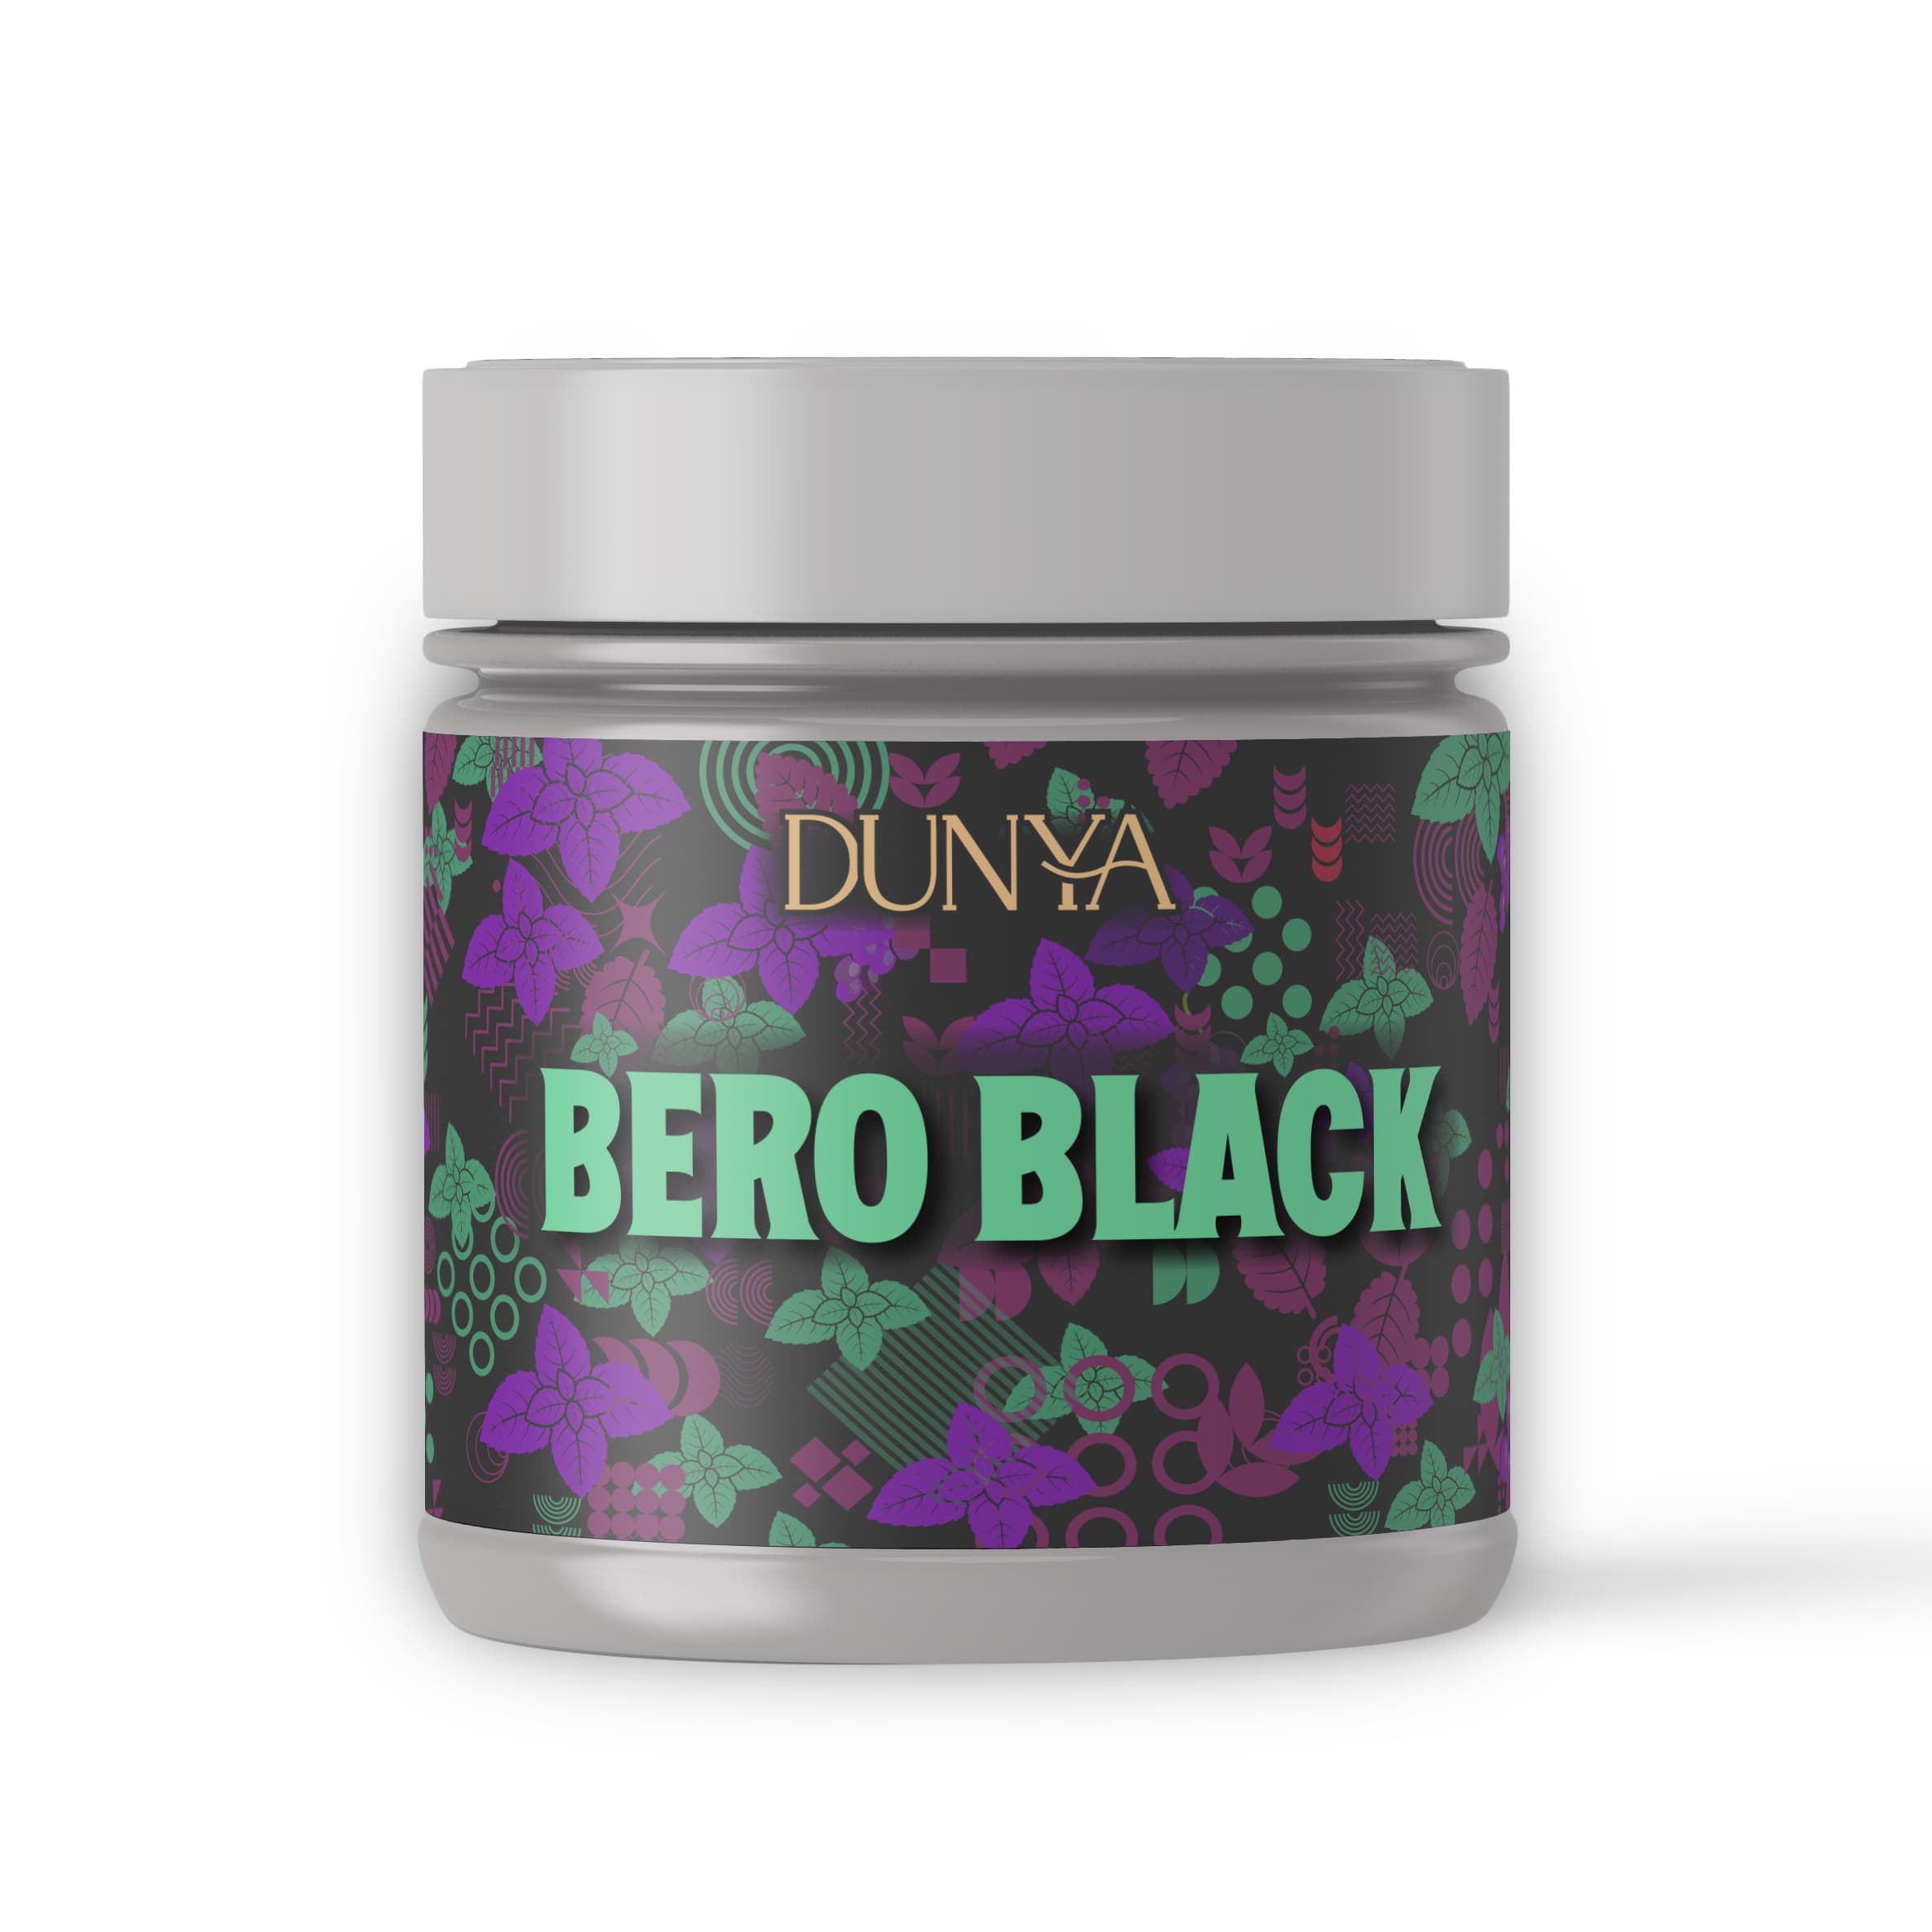 Dunya 25g - Bero Black